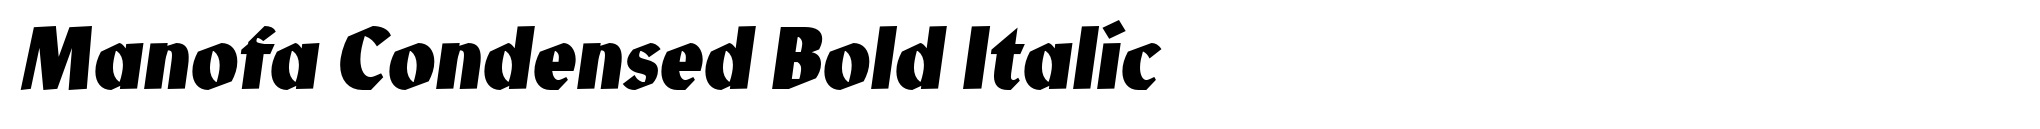 Manofa Condensed Bold Italic image